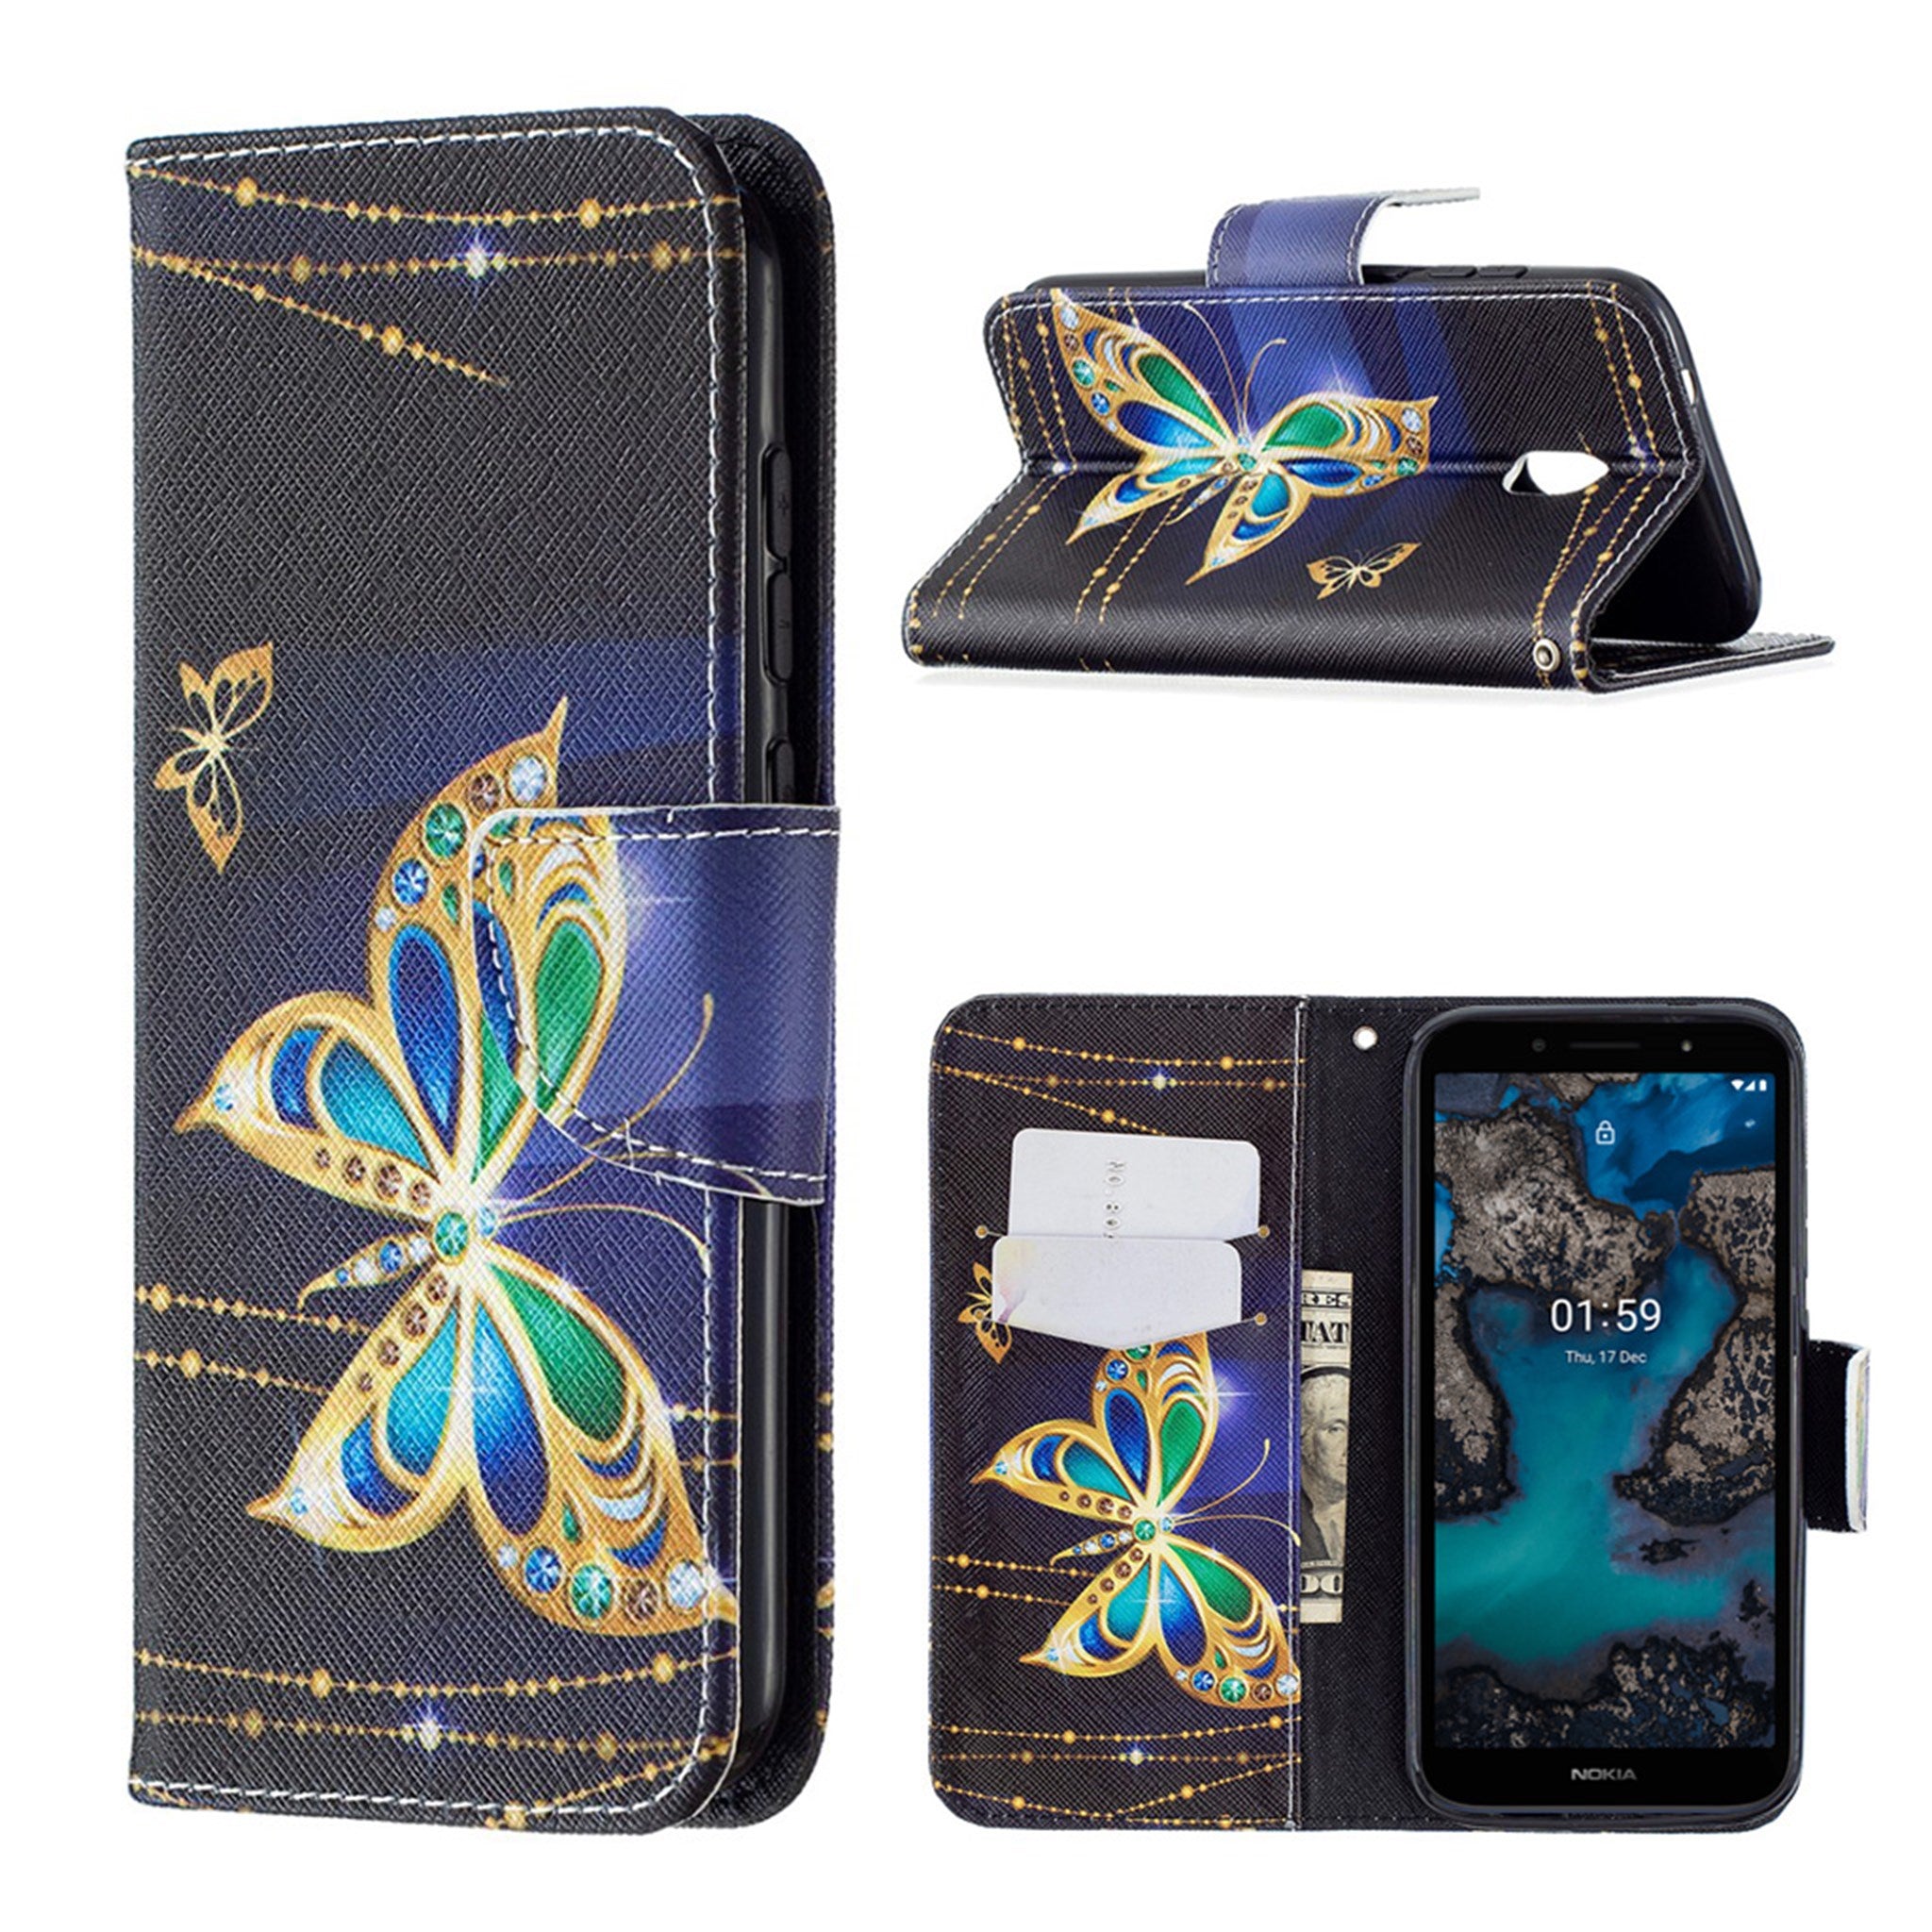 Wonderland Nokia C1 Plus flip case - Vivid Butterfly